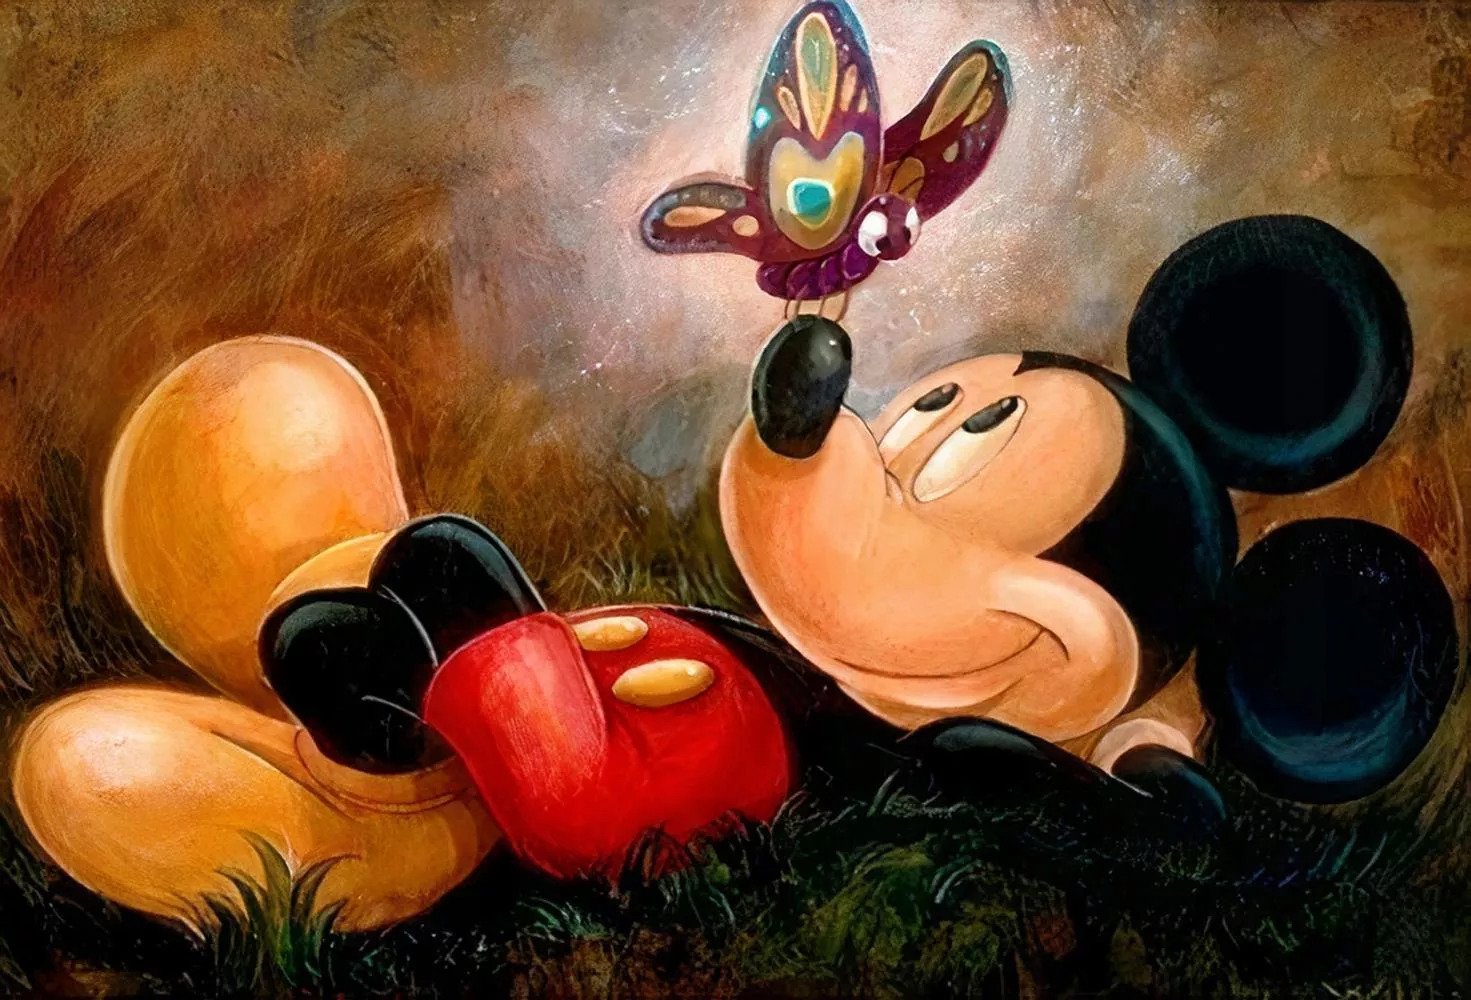 Mickey Mouse Diamond Art